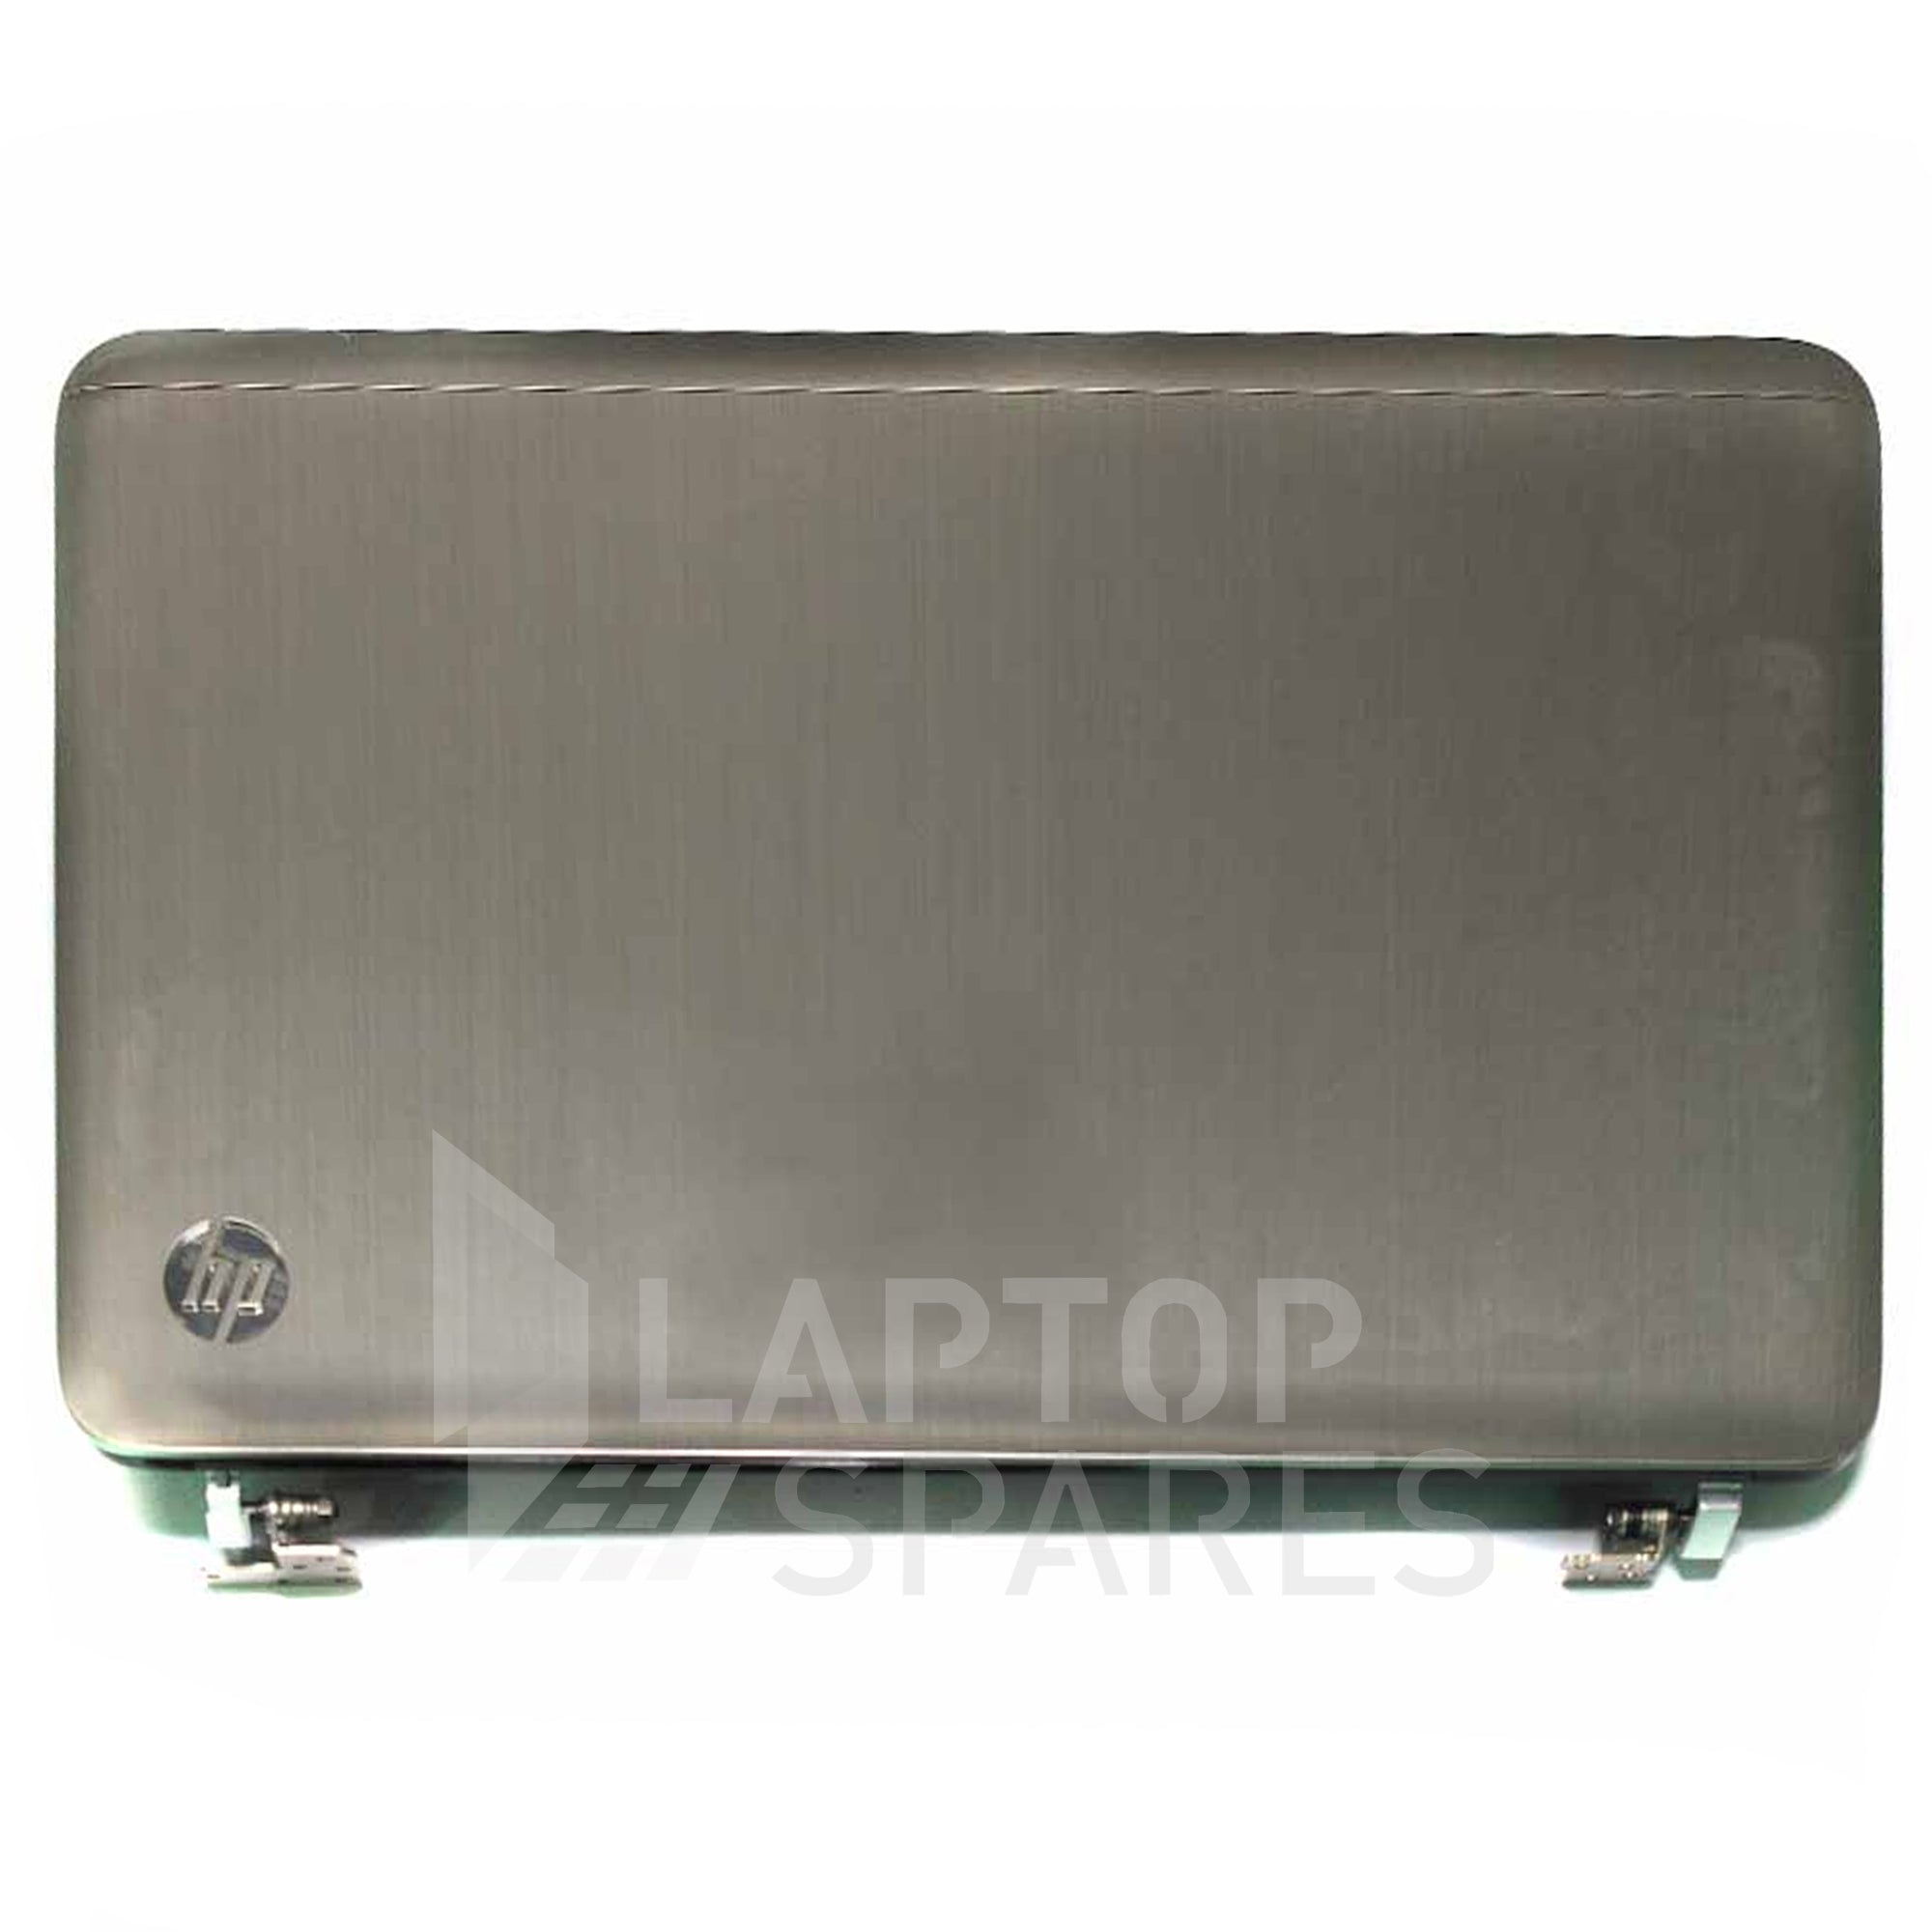 Hp Pavilion Dv6 6000 Ab Panel Laptop Front Cover With Bezel Laptop Spares